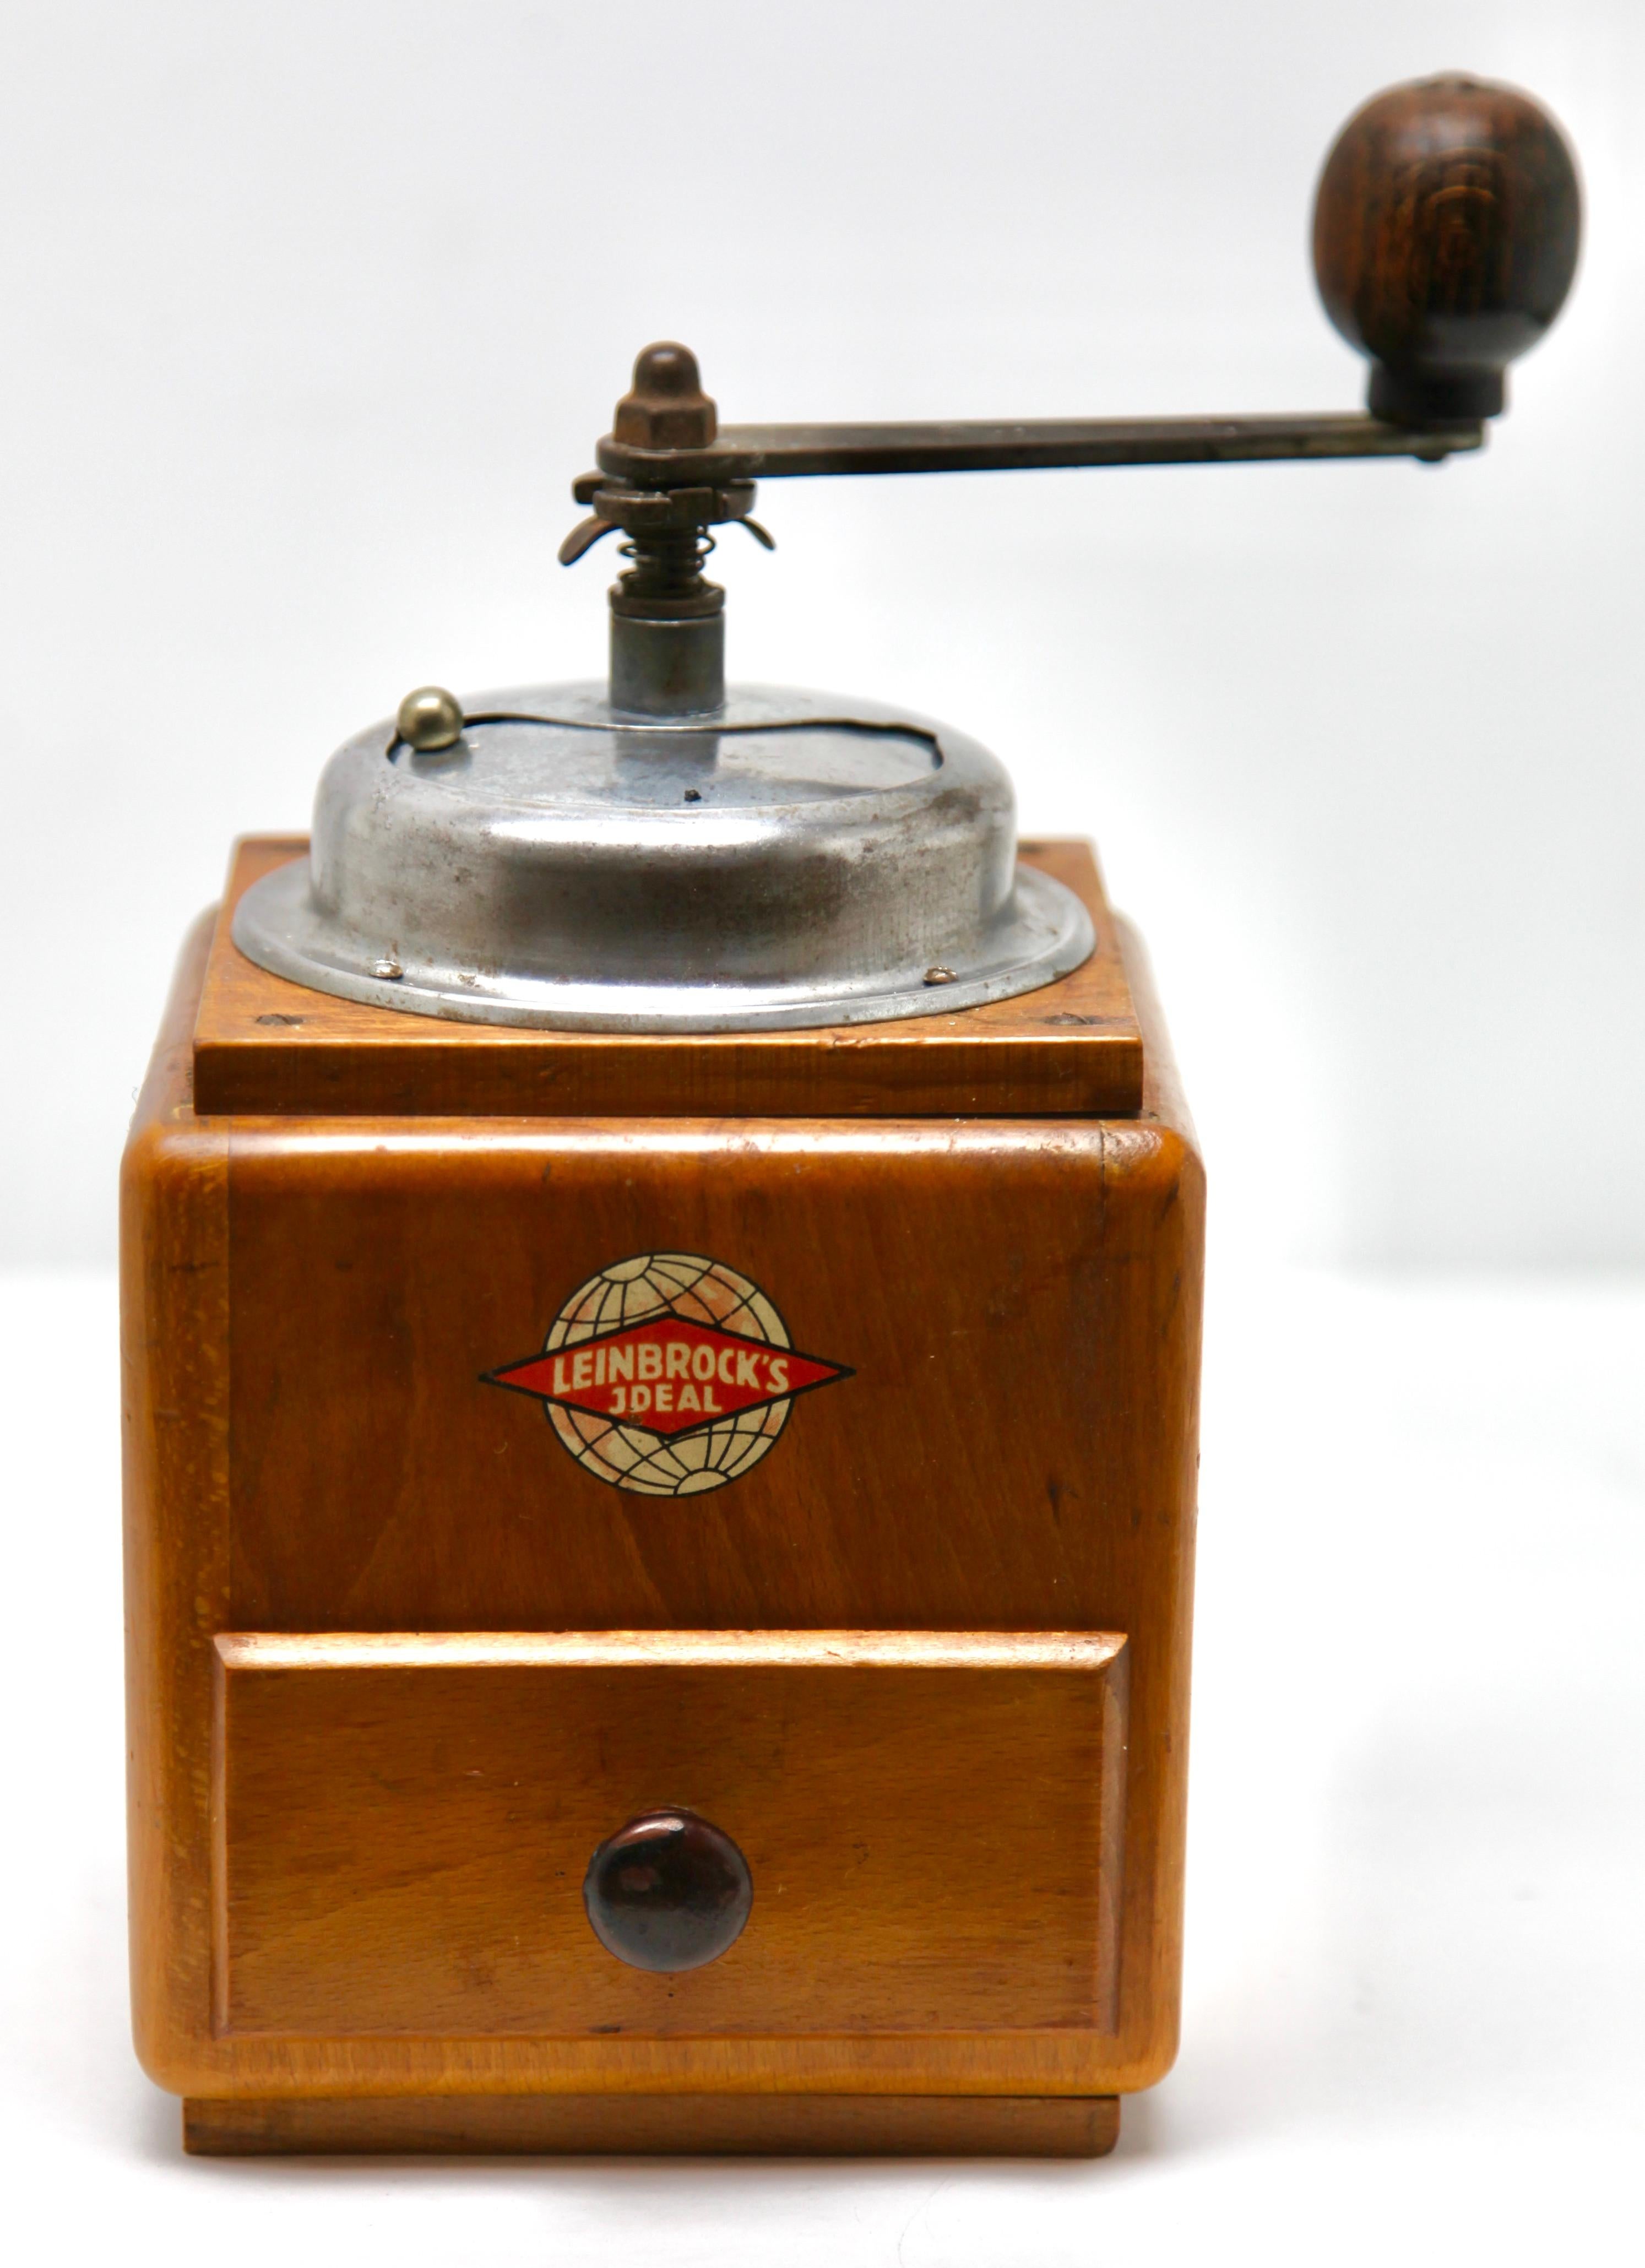 leinbrock ideal coffee grinder